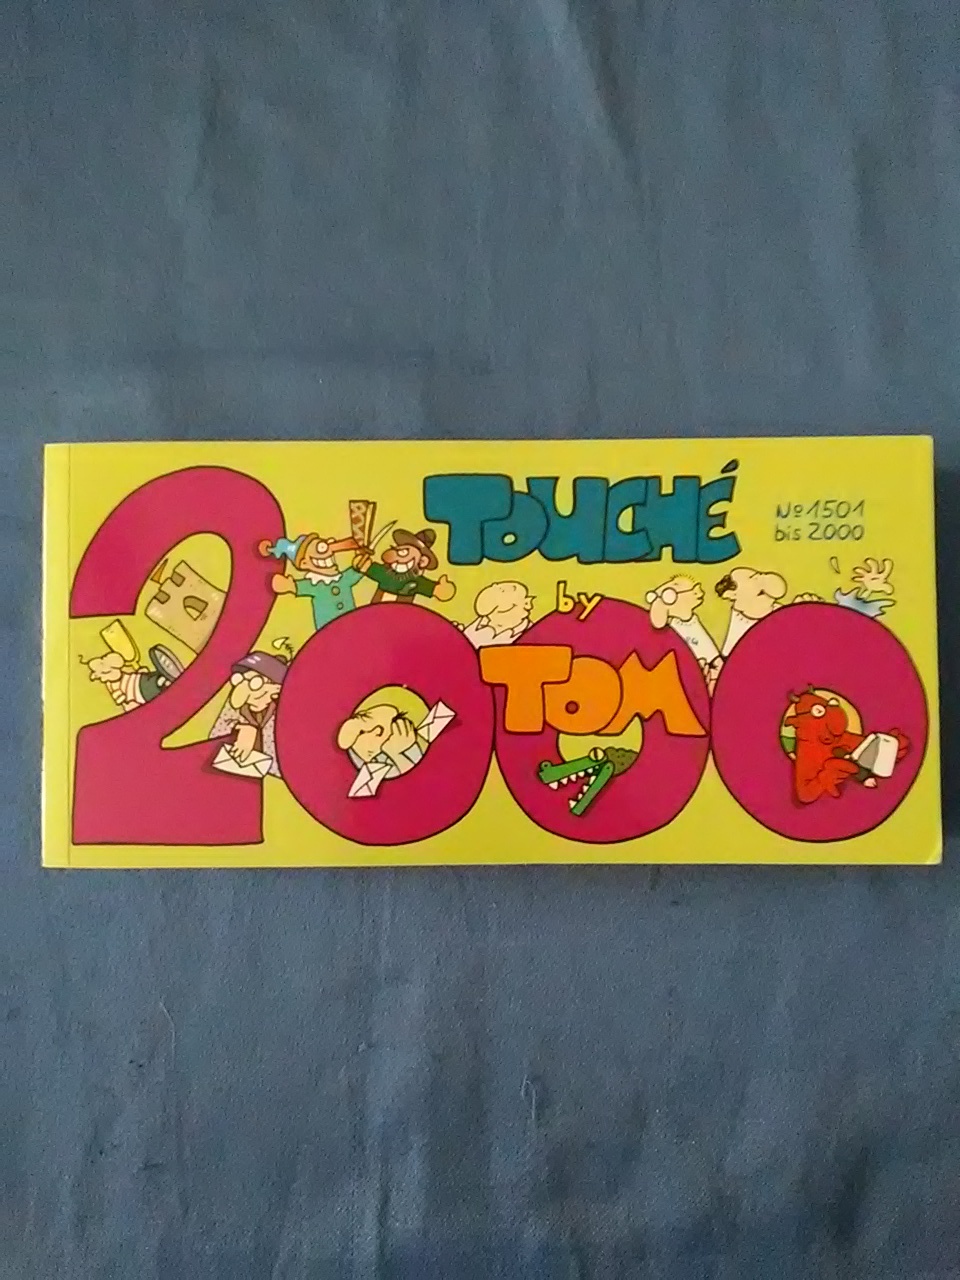 Touché 2000 : No. 1501 bis 2000. by - Tom